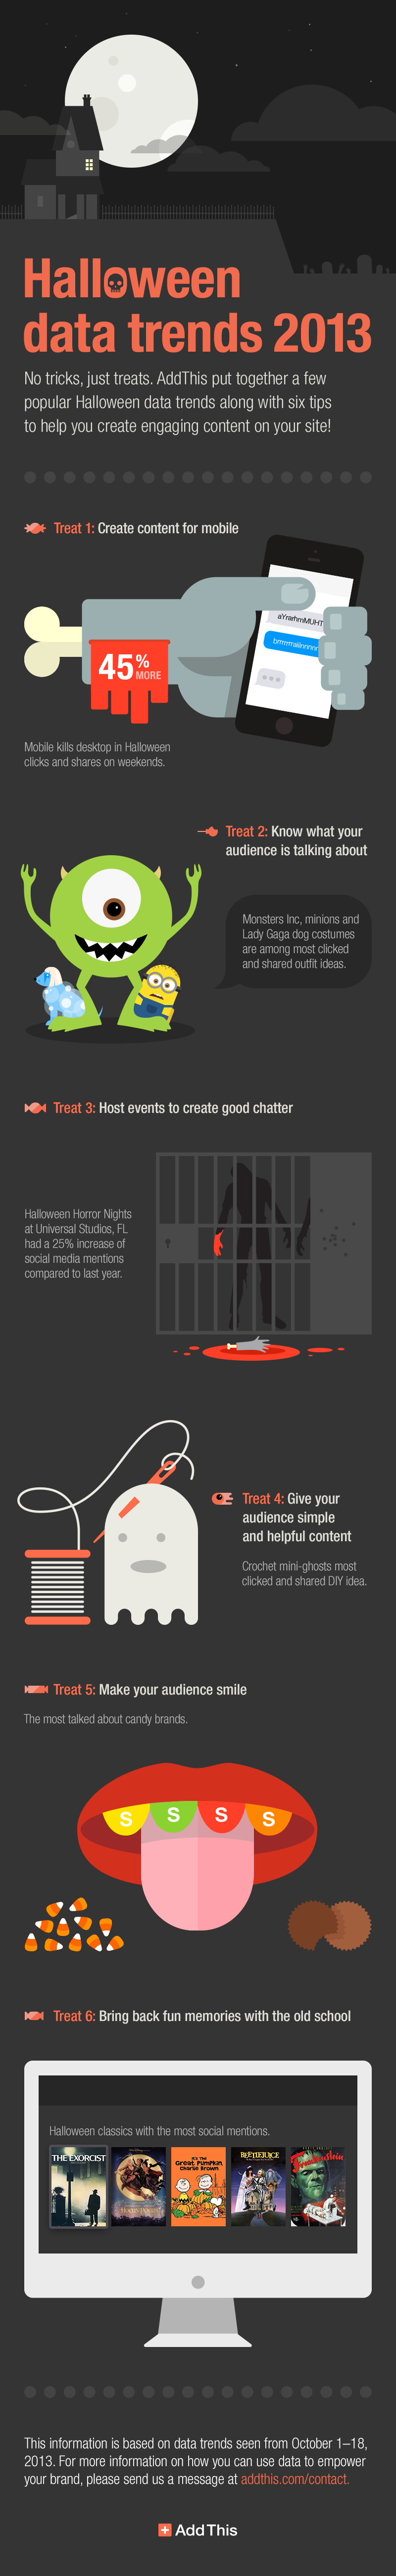 halloween_infographic_RD1-2